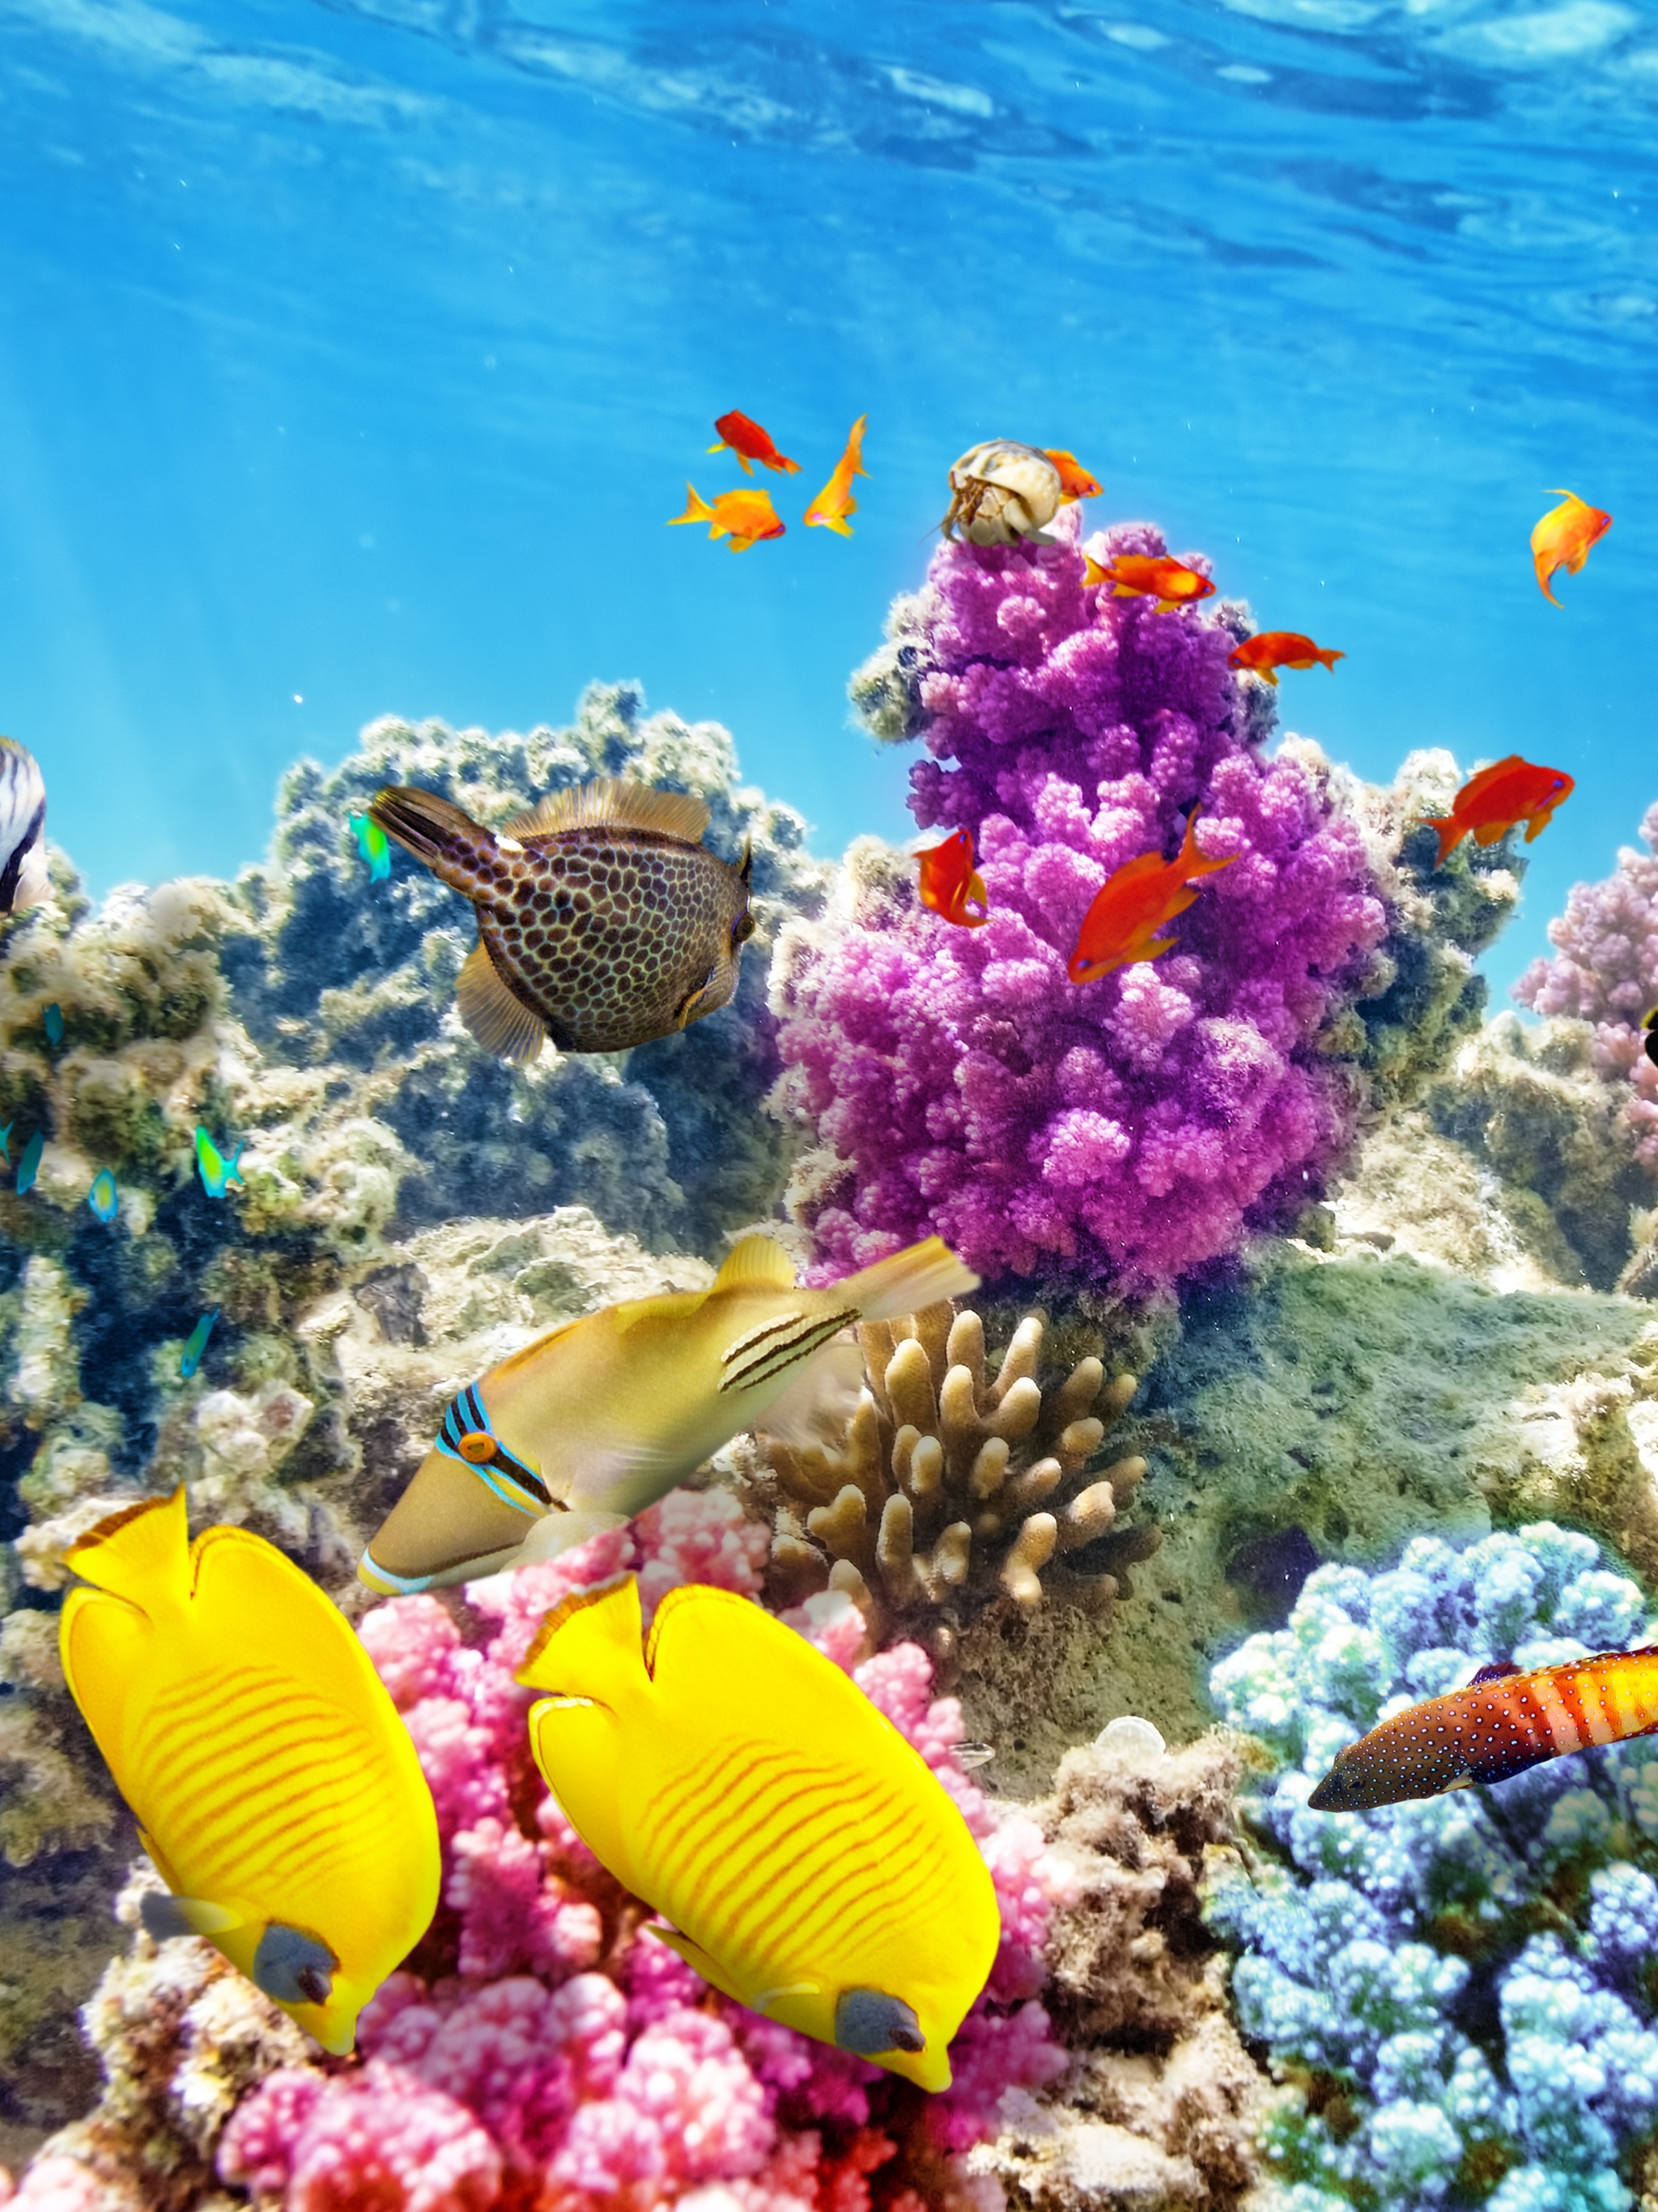 1179385 descargar imagen animales, pez, arrecife de coral, submarino, submarina, océano, peces: fondos de pantalla y protectores de pantalla gratis